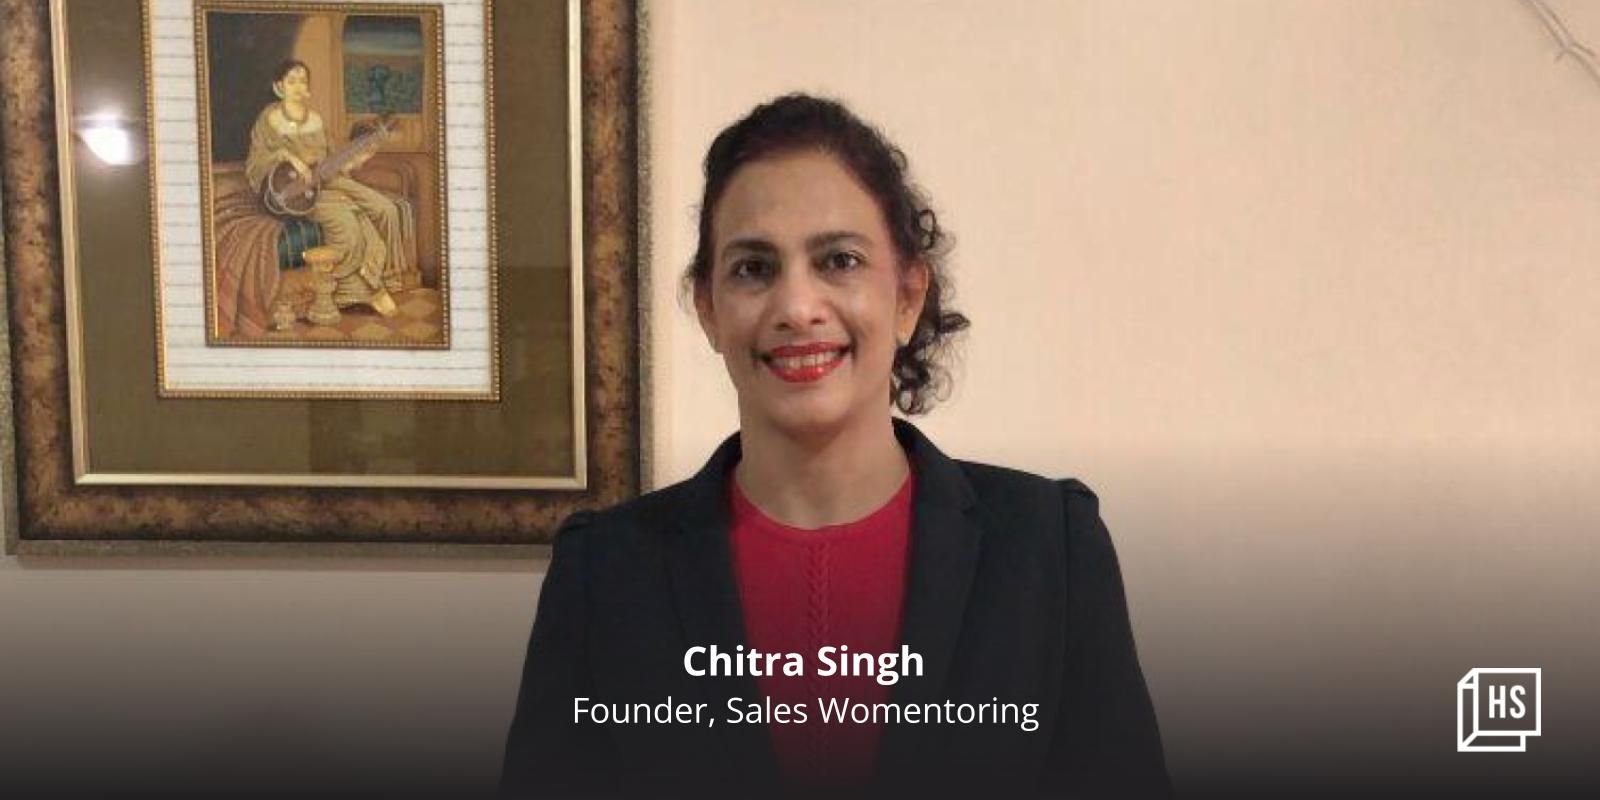 Meet the woman striving to bridge the diversity gap in sales 